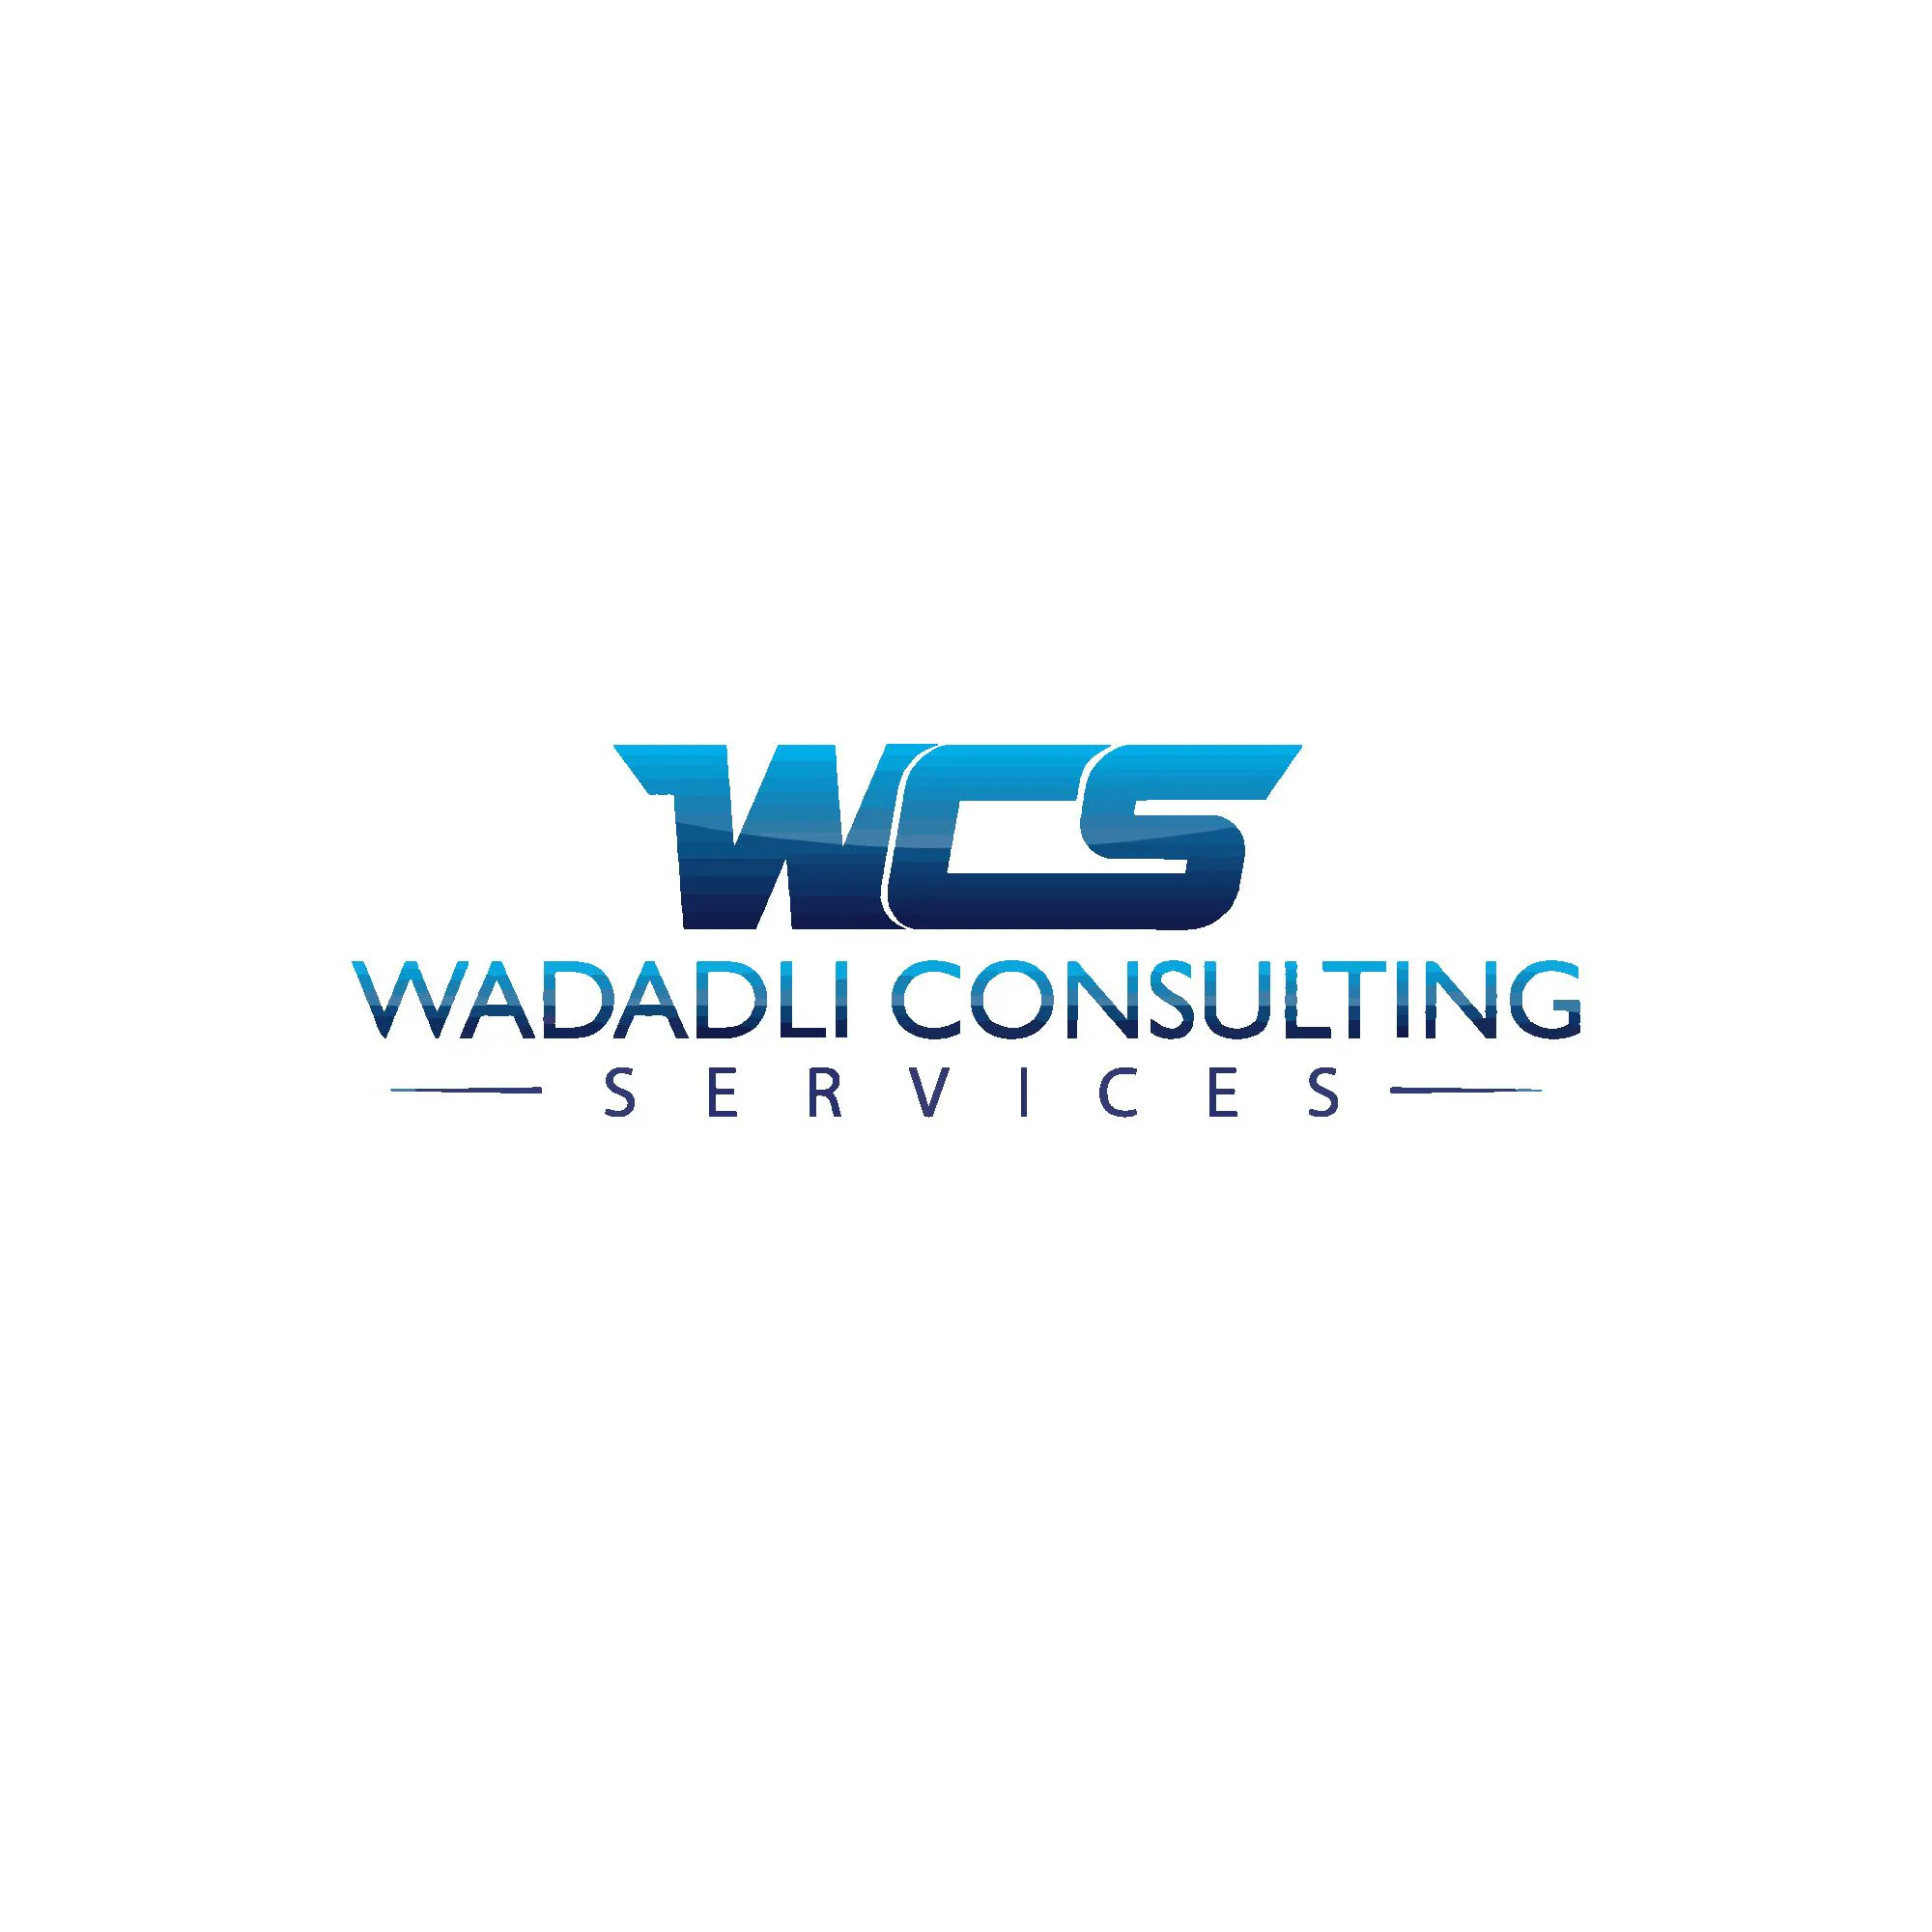 Wadadli Consulting Services logo